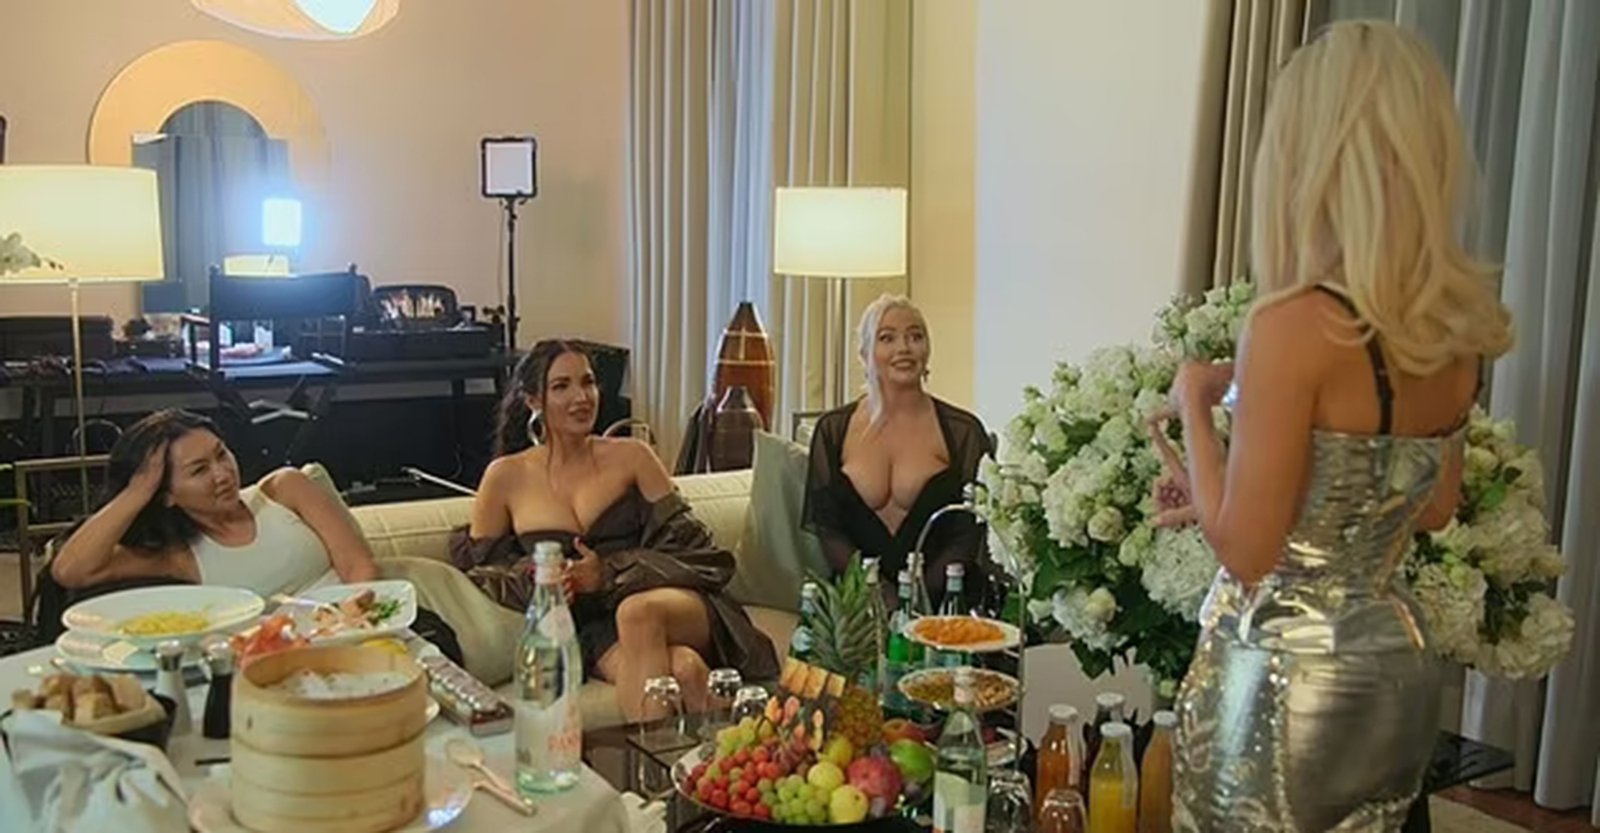 Kim Kardashian on "The Kardashians" with Tracy Romulus, Olivia Pierson and Natalie Halcro